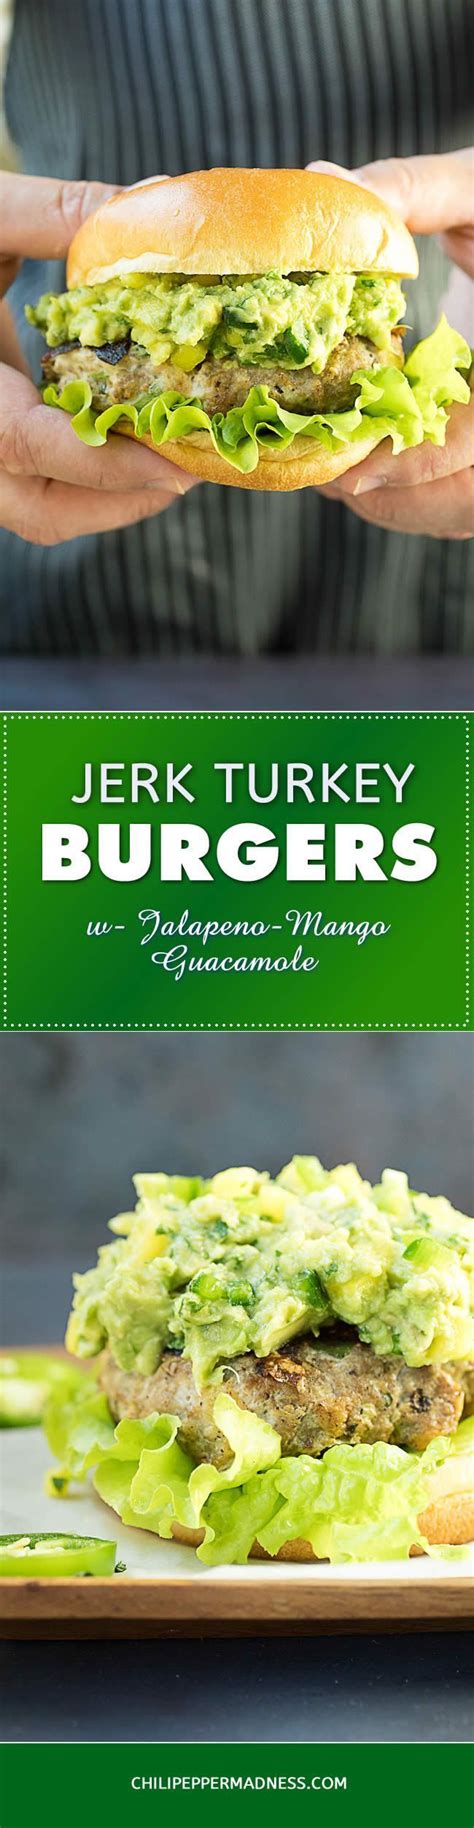 Jerk Turkey Burgers With Jalapeno Mango Guacamole A Recipe For Juicy